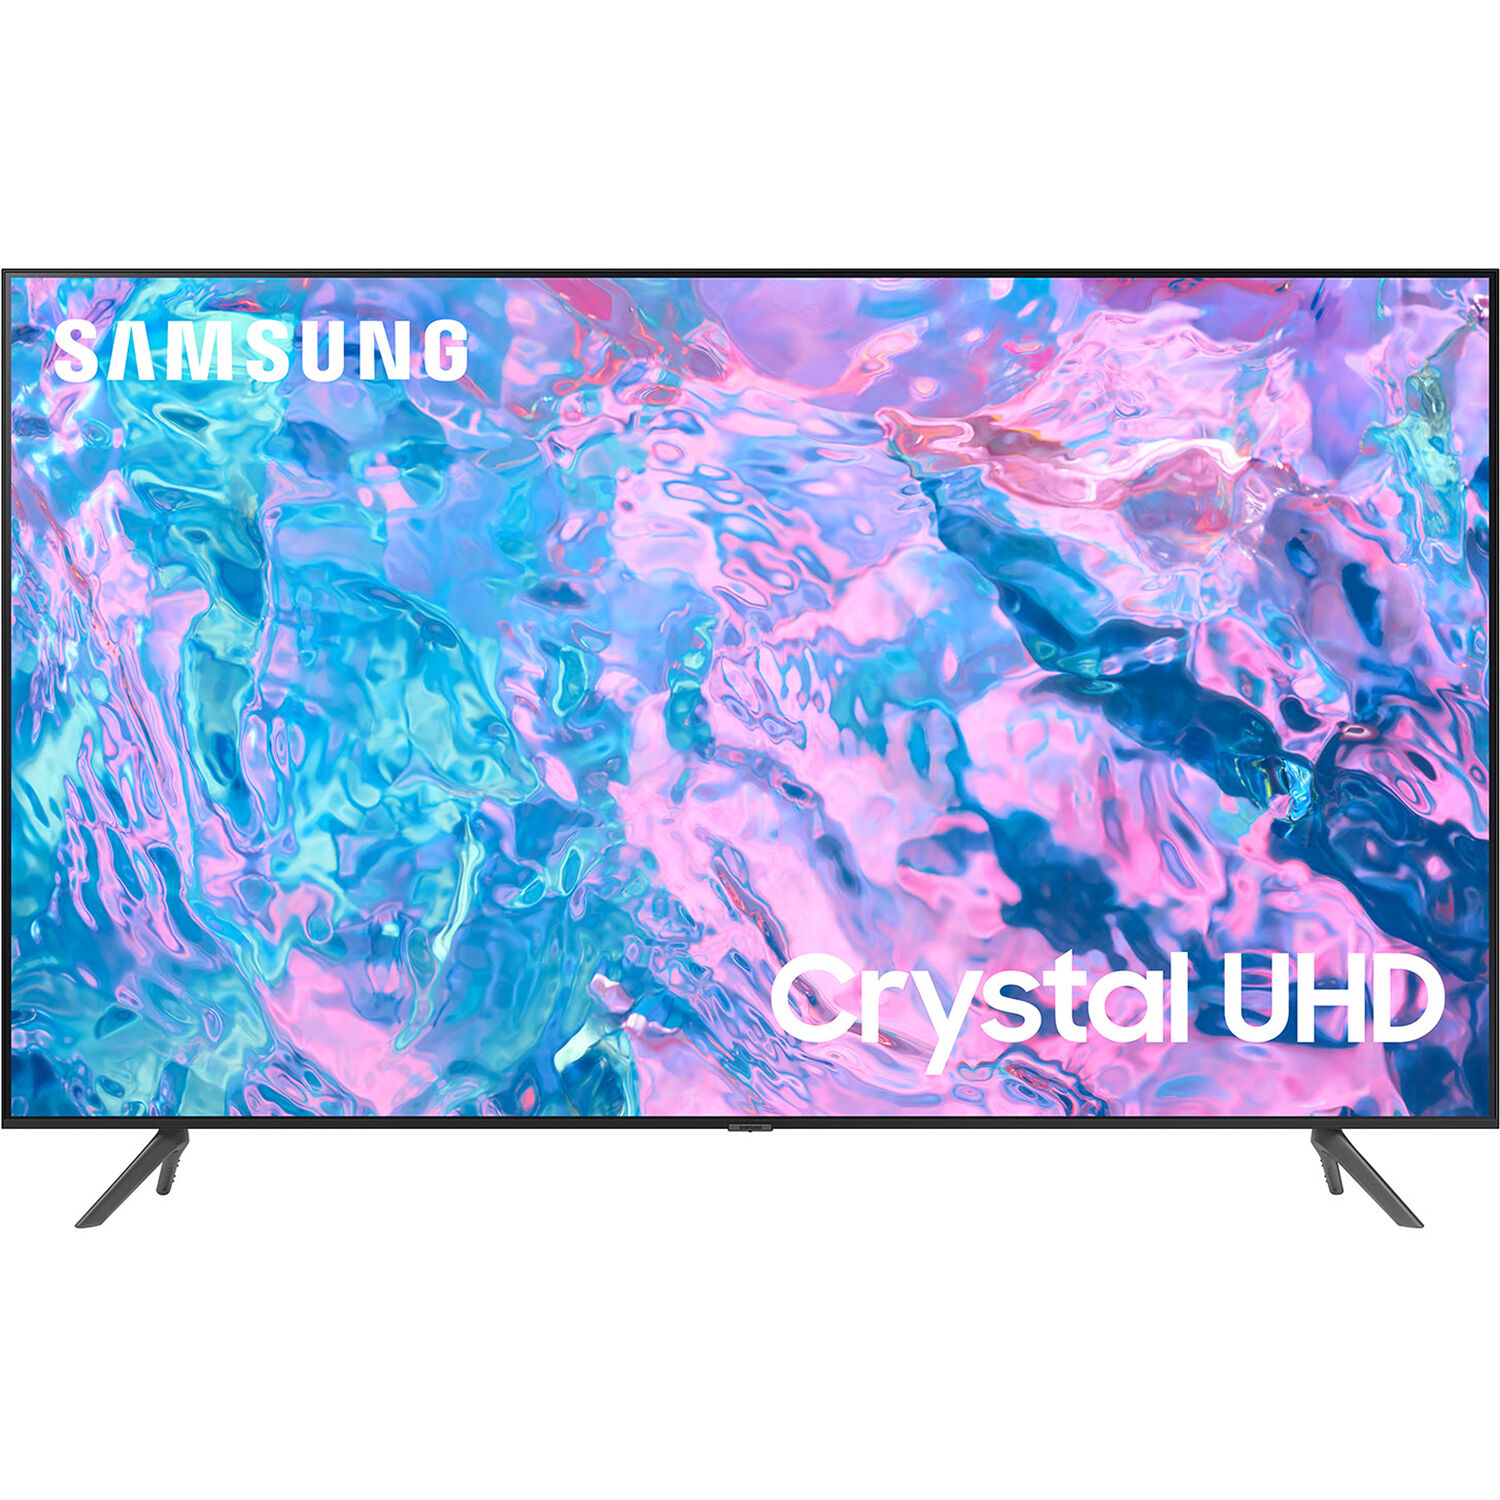 Tv Samsung Cu7000 Crystal Uhd 43 4K Hdr Smart Led